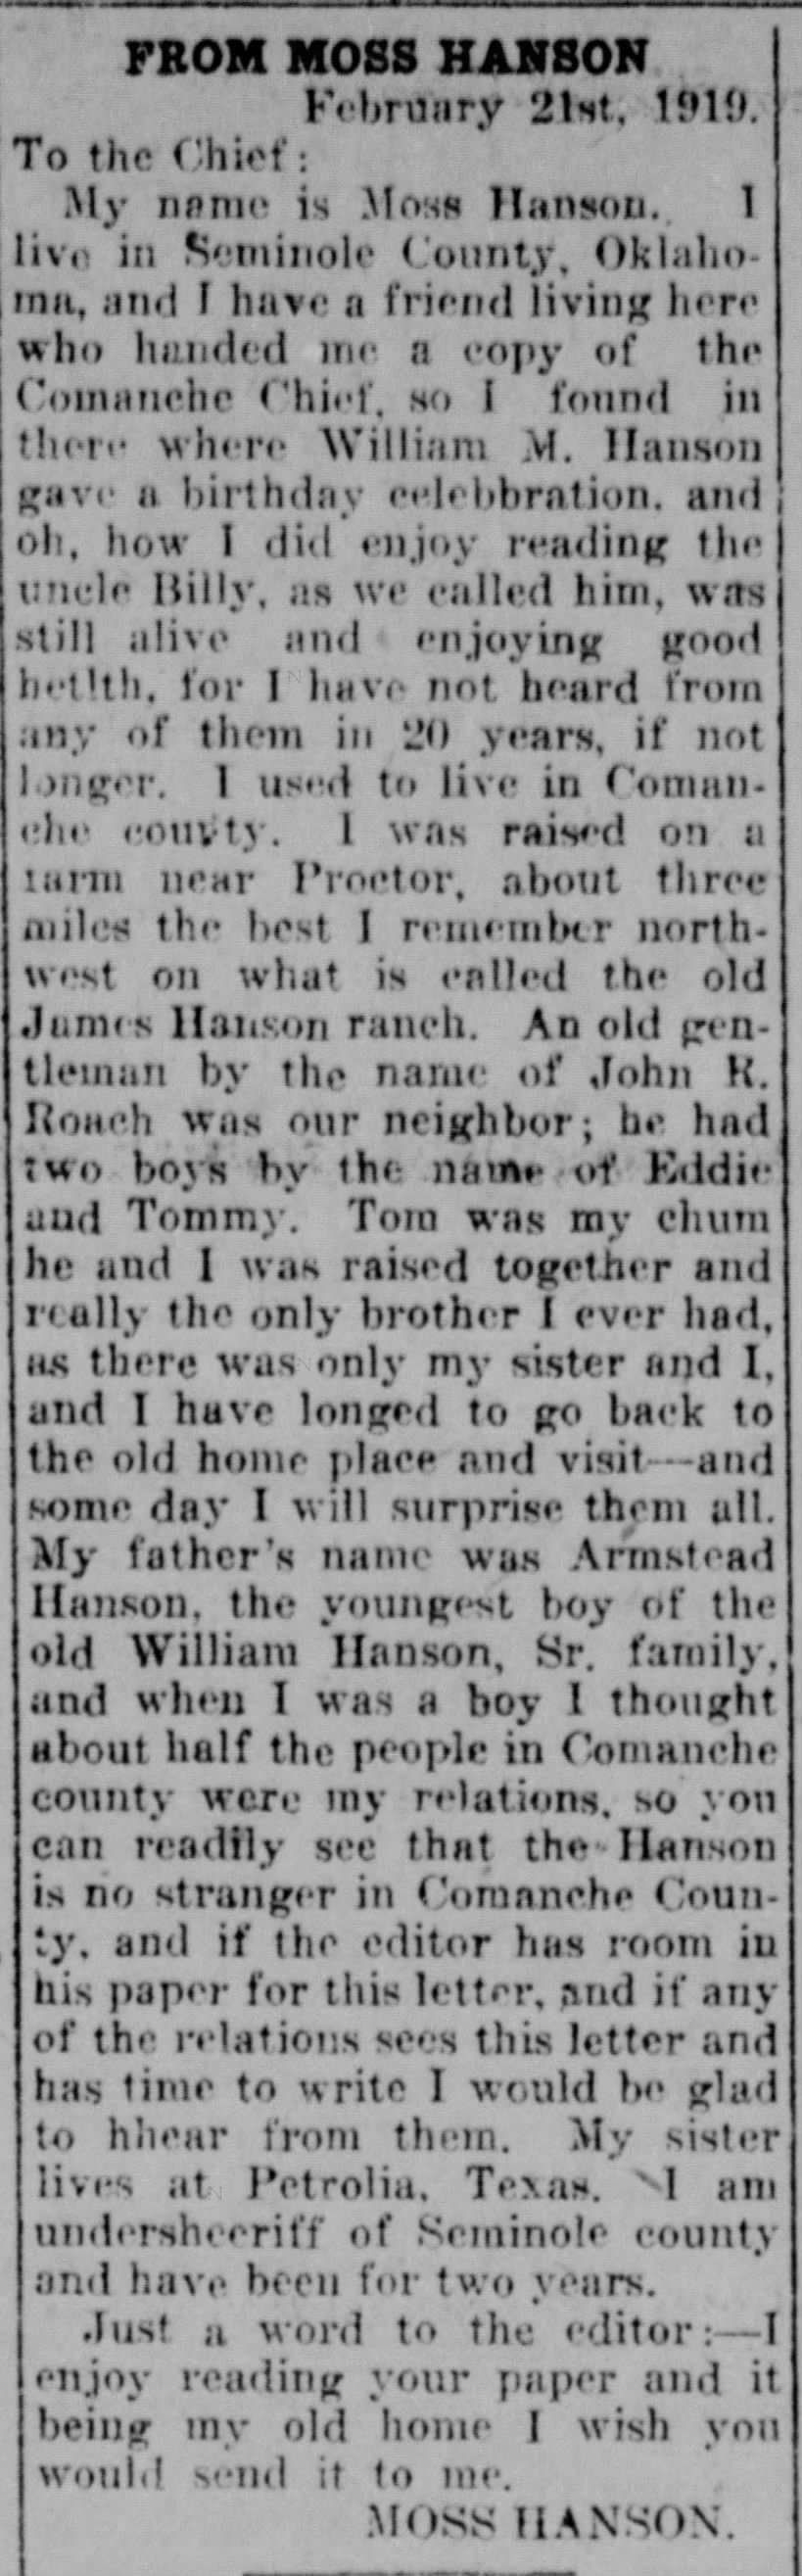 Article written by Moss Hanson, son of Armstead Hanson